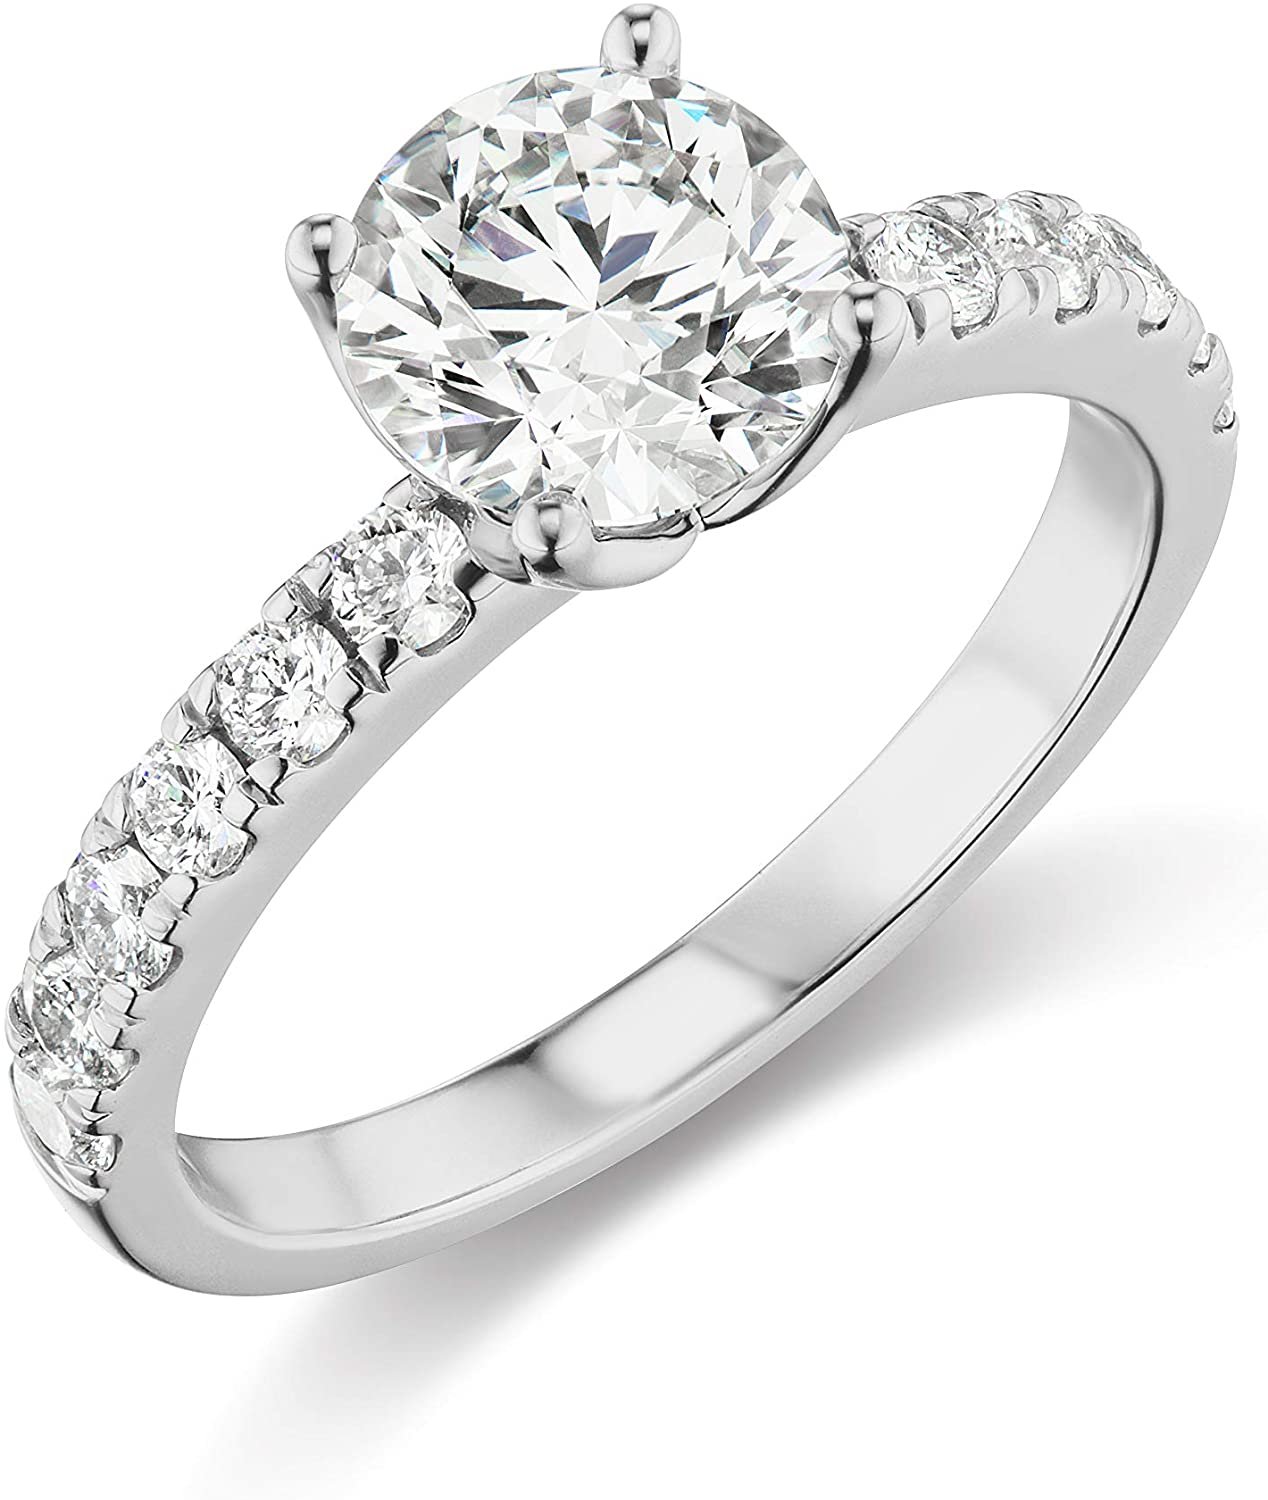 IGI Certified 14K White Gold 2-1/2 Cttw Brilliant-Cut Colorless Lab Created Diamond Solitaire Engagement Ring with Pavé-Set Band (Center Stone: E-F Color, VVS1-VVS2 Clarity) - Size 7.5